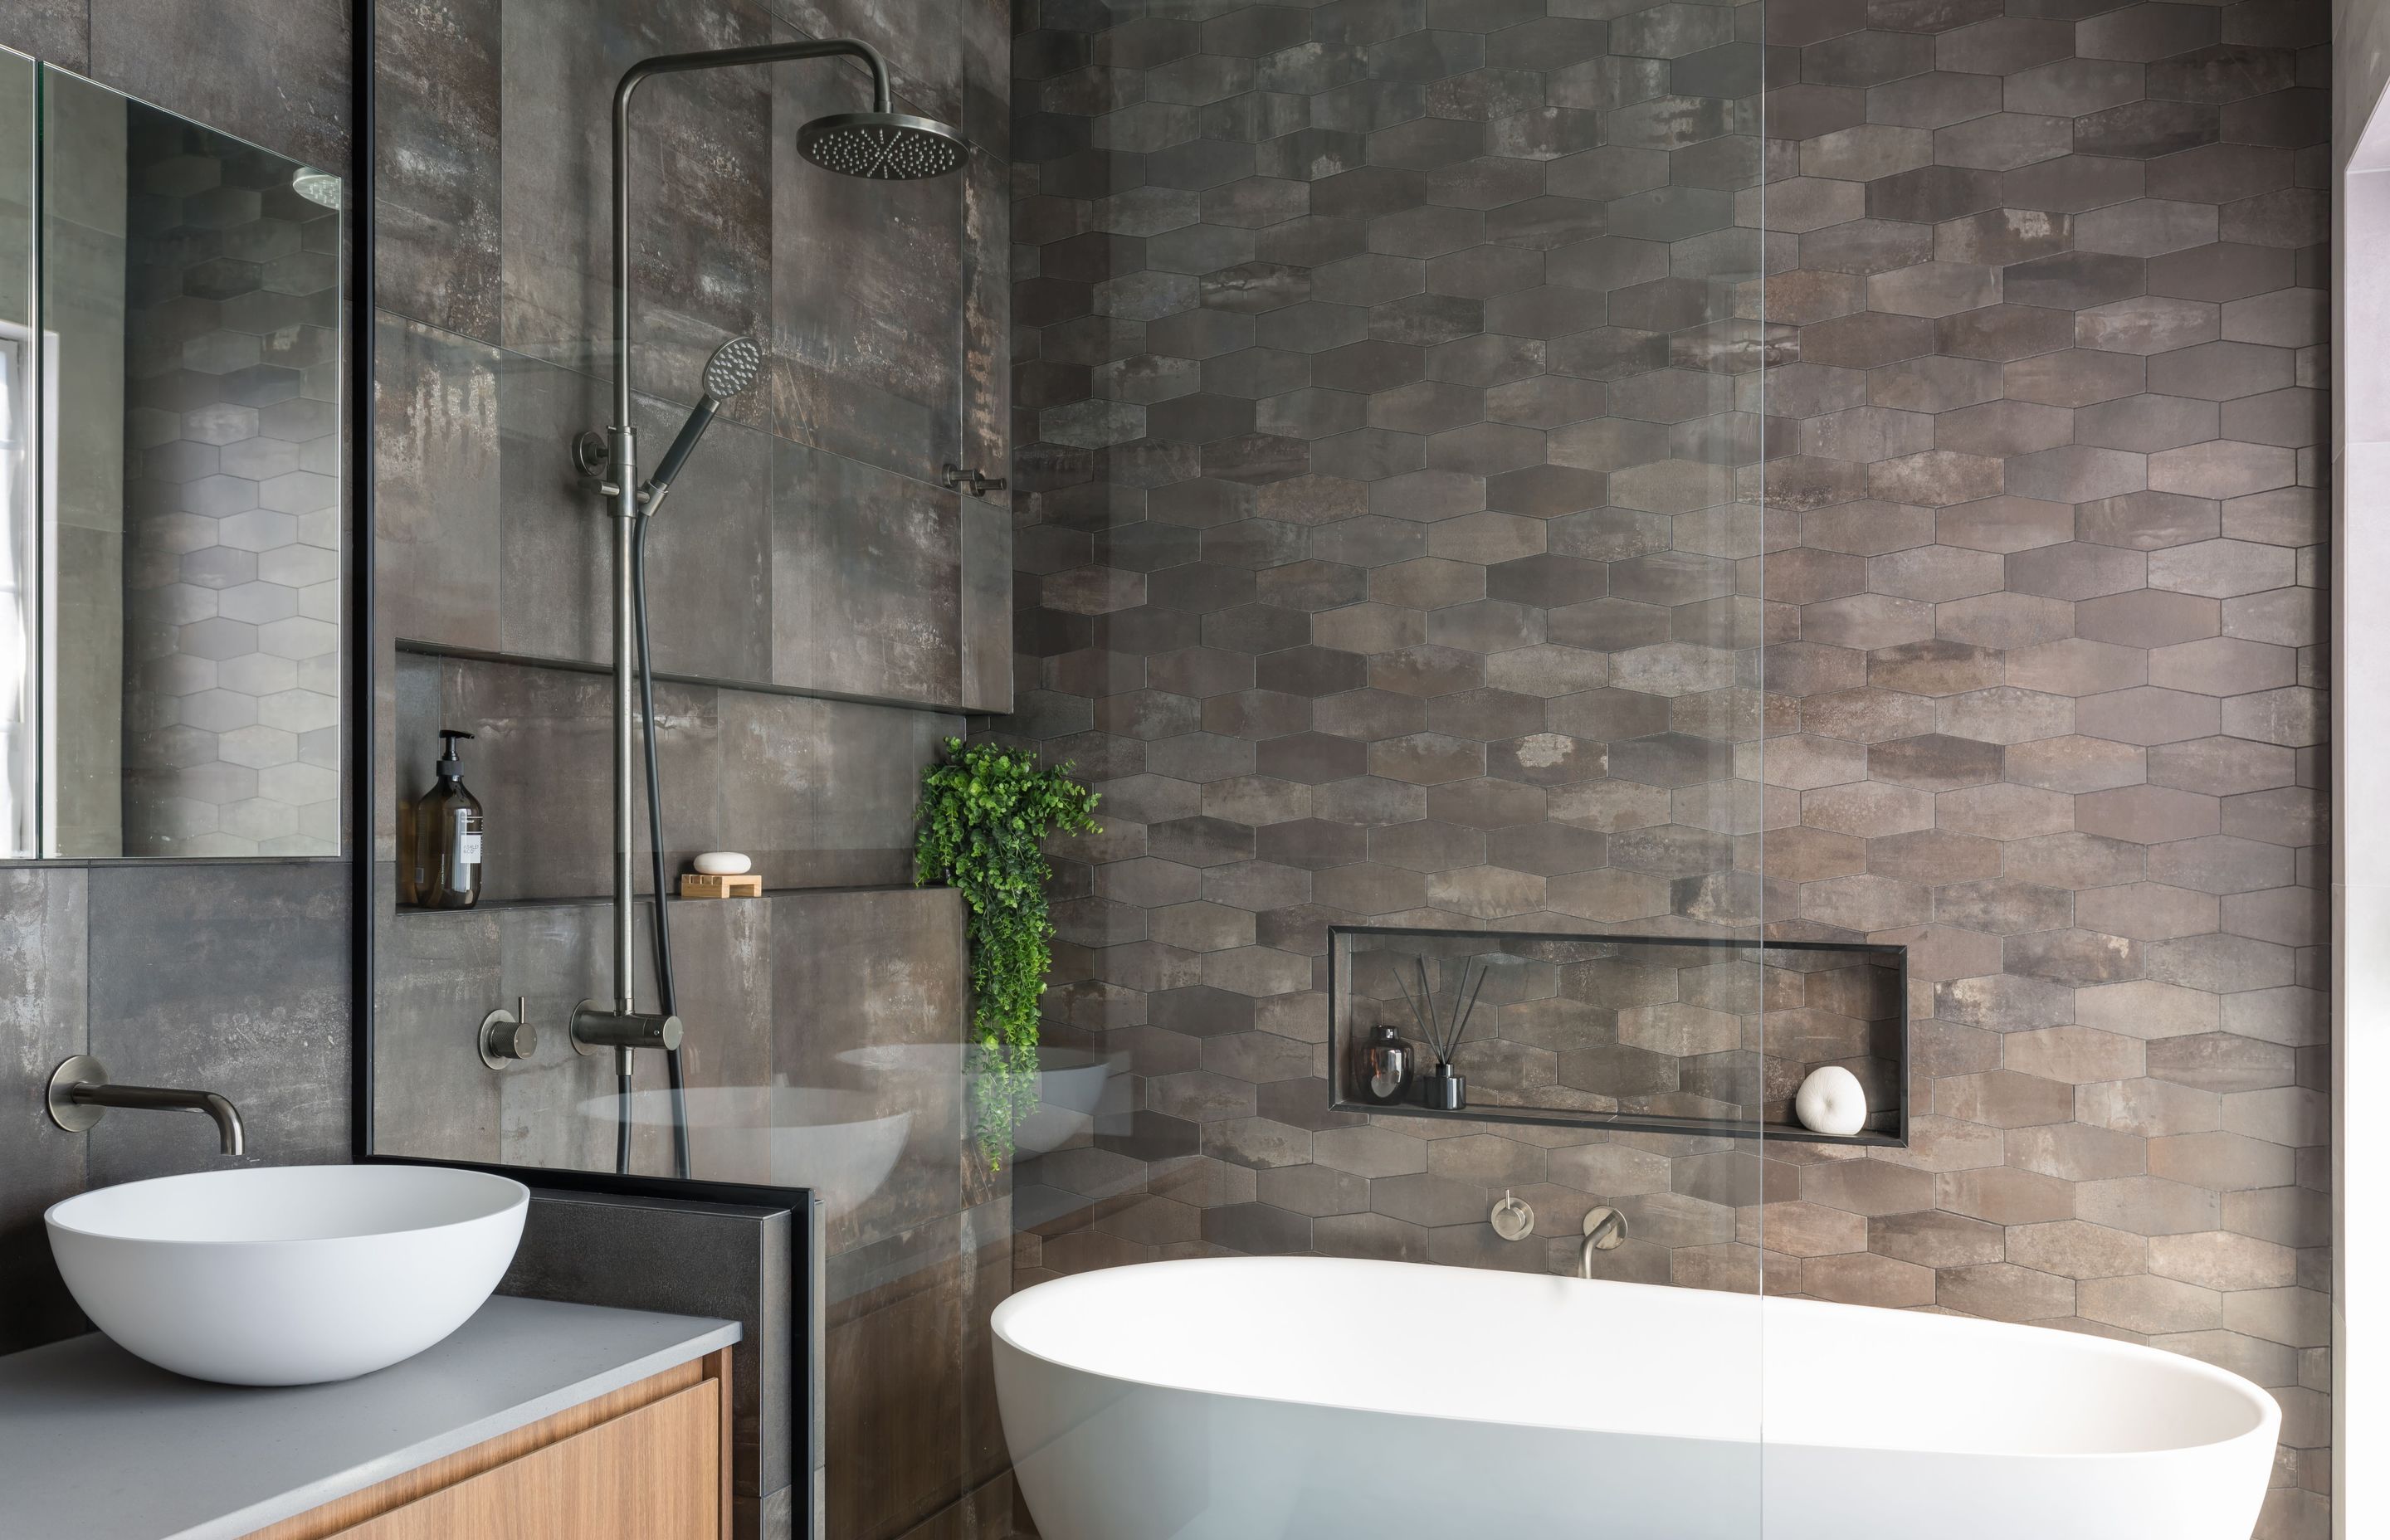 Ensuite Bathroom - mosaic tiles and shower niche